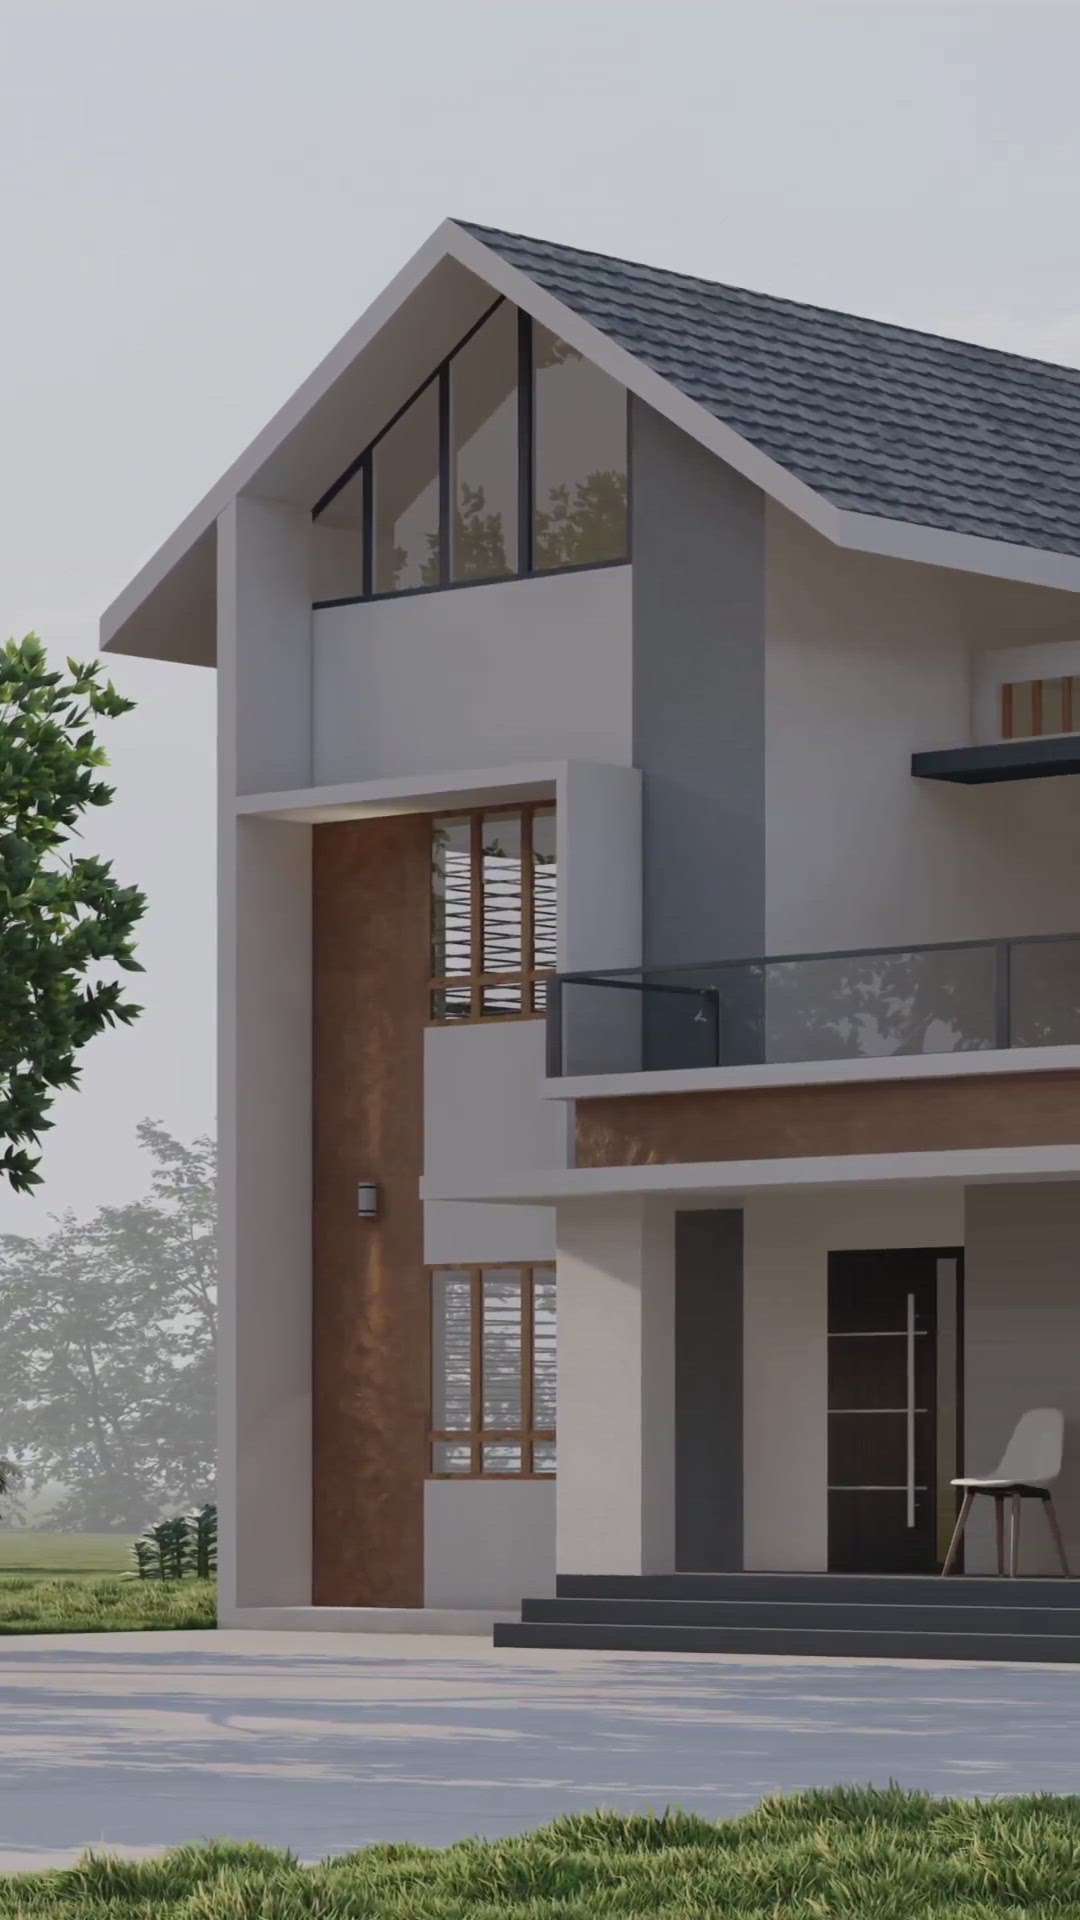 New Design ✨
.
.
.
.
2190 Sq.ft
.
.
 #new_home  #newwork  #KeralaStyleHouse  #keralastyle  #keralaarchitectures  #CivilEngineer  #colours   #LandscapeIdeas  #LandscapeGarden  #beautifull  #trivandram  #trivandrumhomes  #InteriorDesigner  #Flooring  #3dmodeling  #3drenders  #3drending #TexturePainting  #trendingdesign  #koloapp  #trending